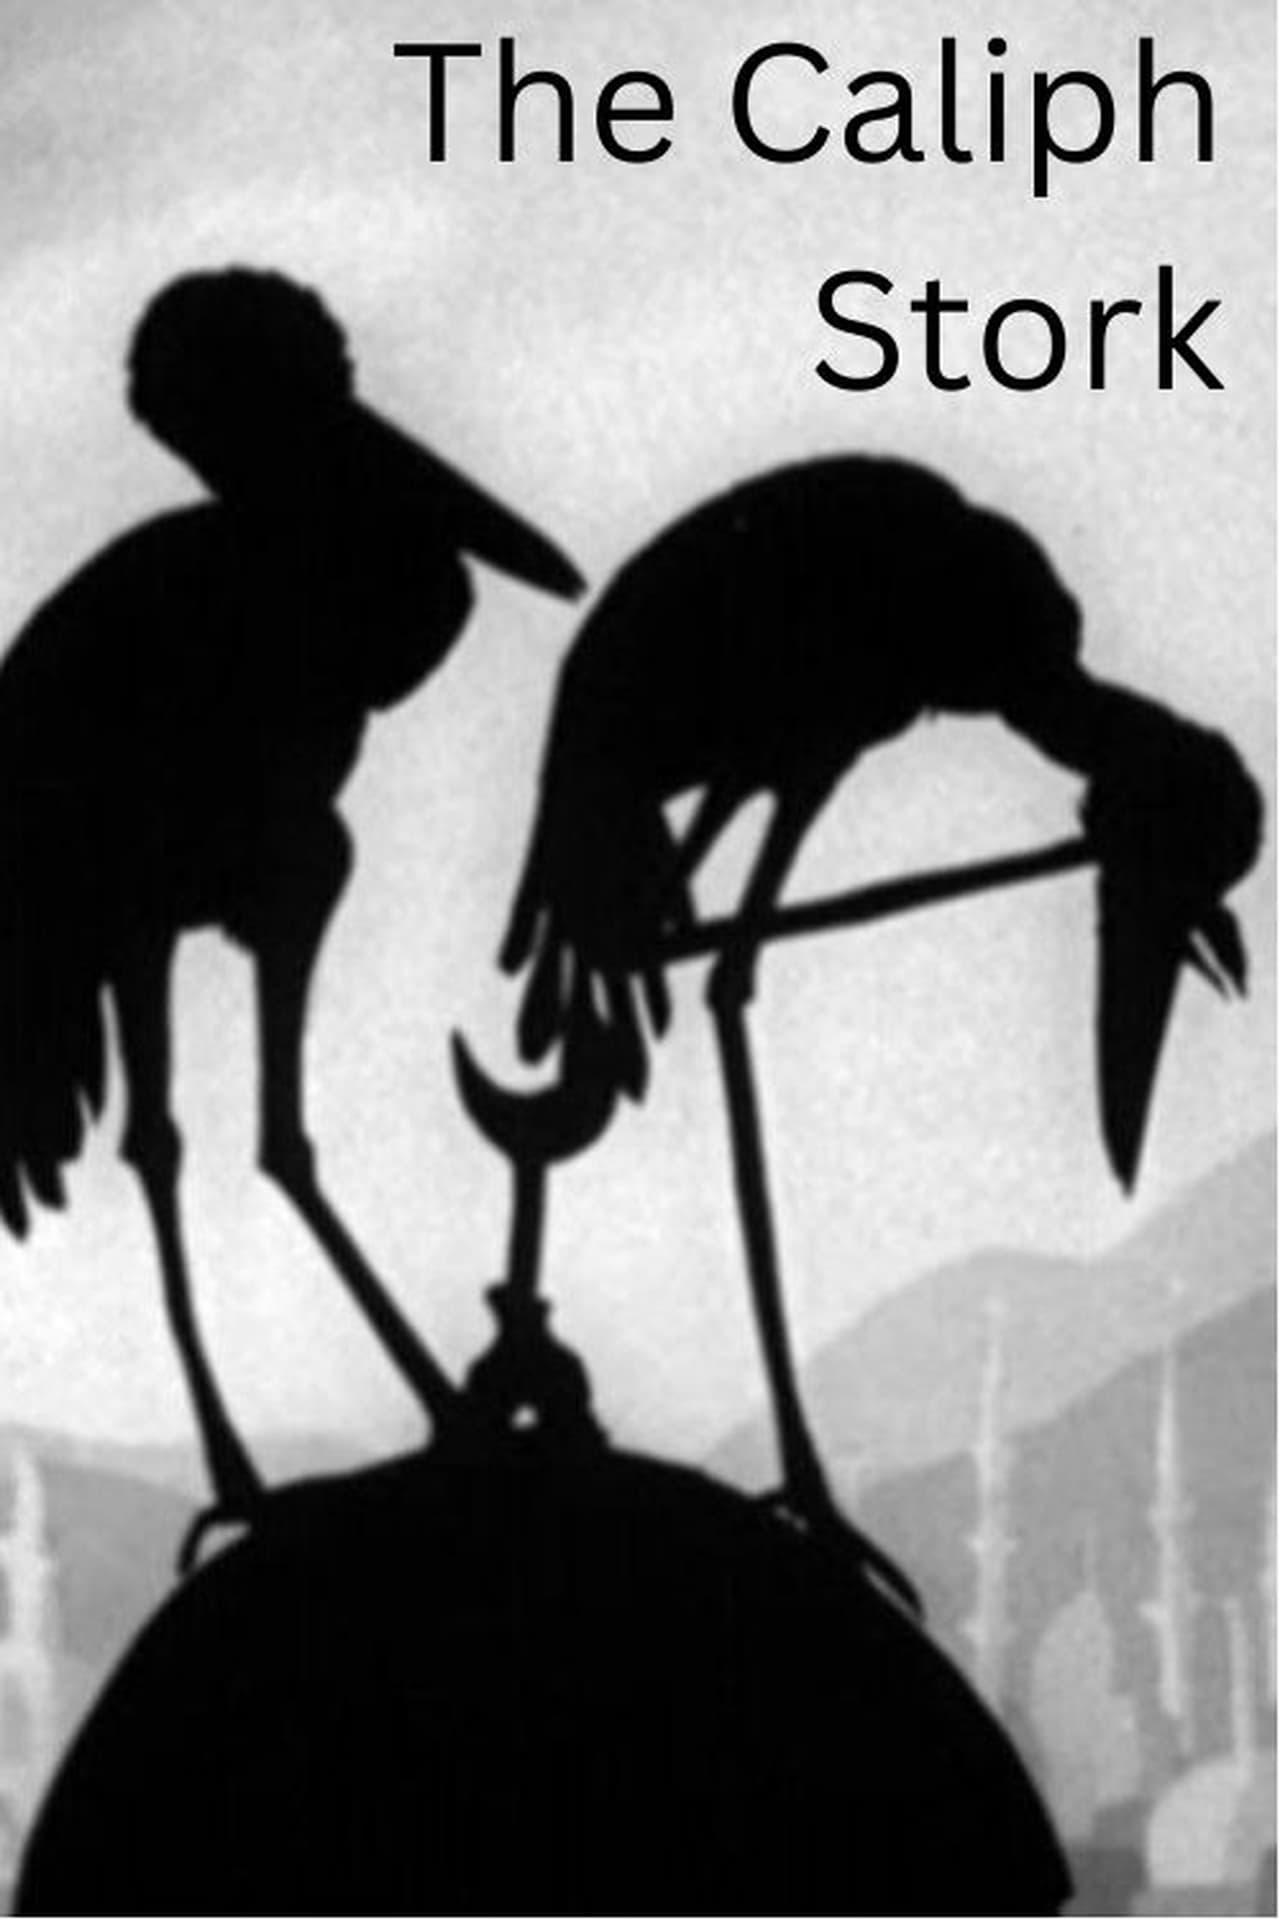 The Caliph Stork poster